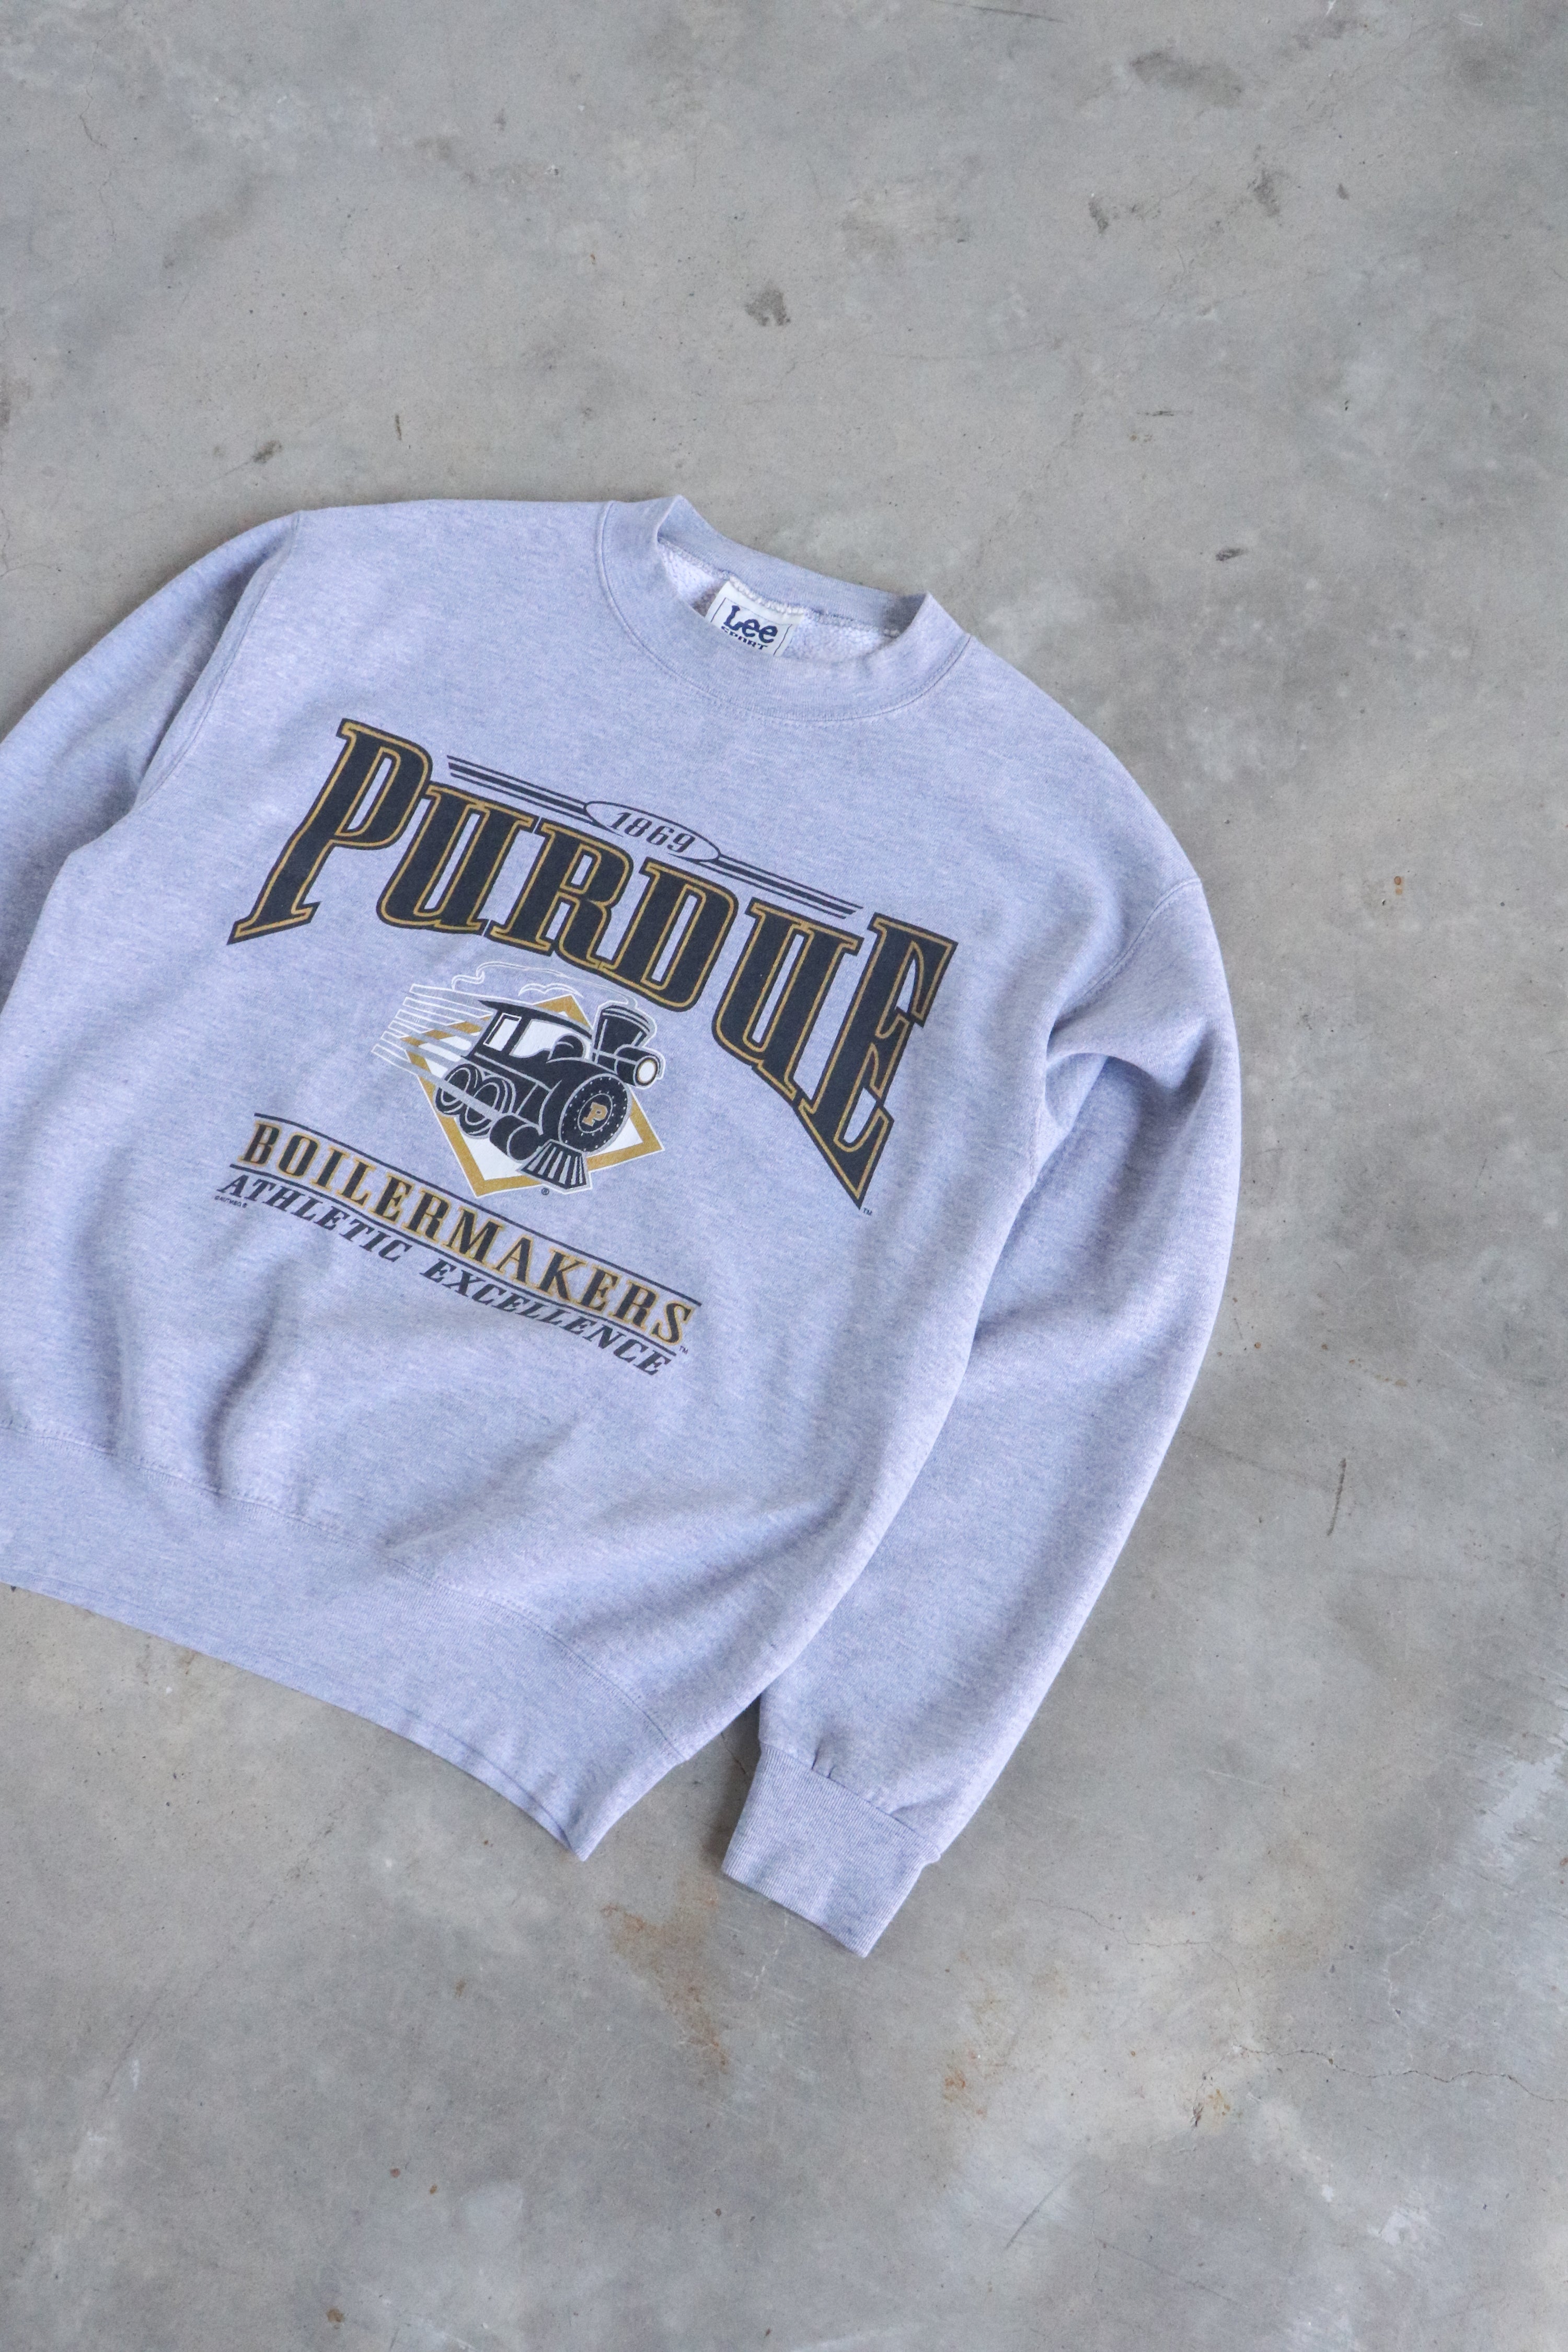 Vintage Purdue University Sweater Medium